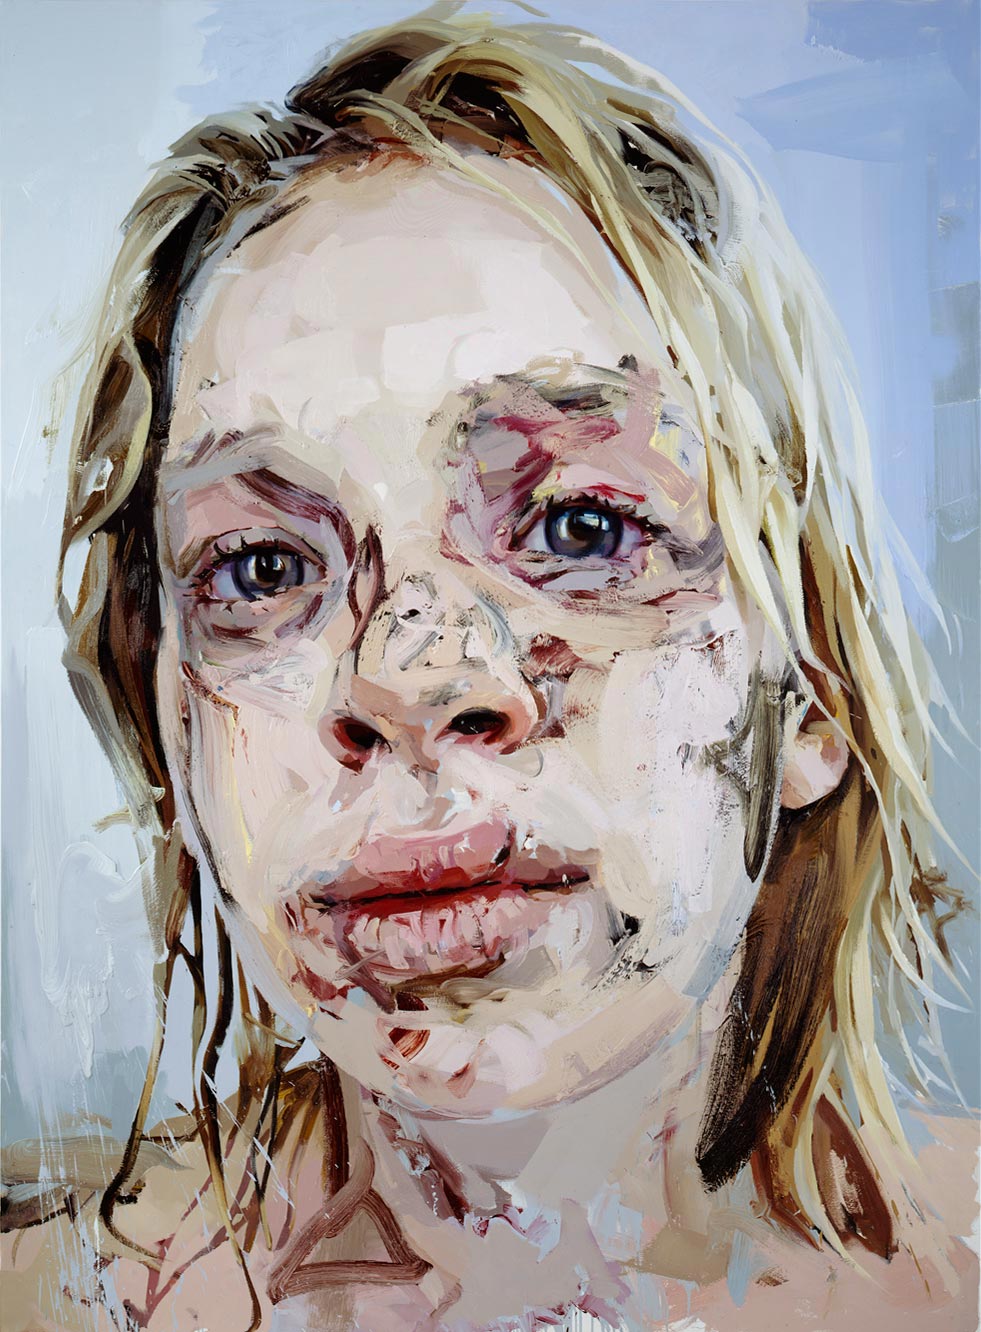 Jenny Saville, Bleach, 2008, Oil on canvas